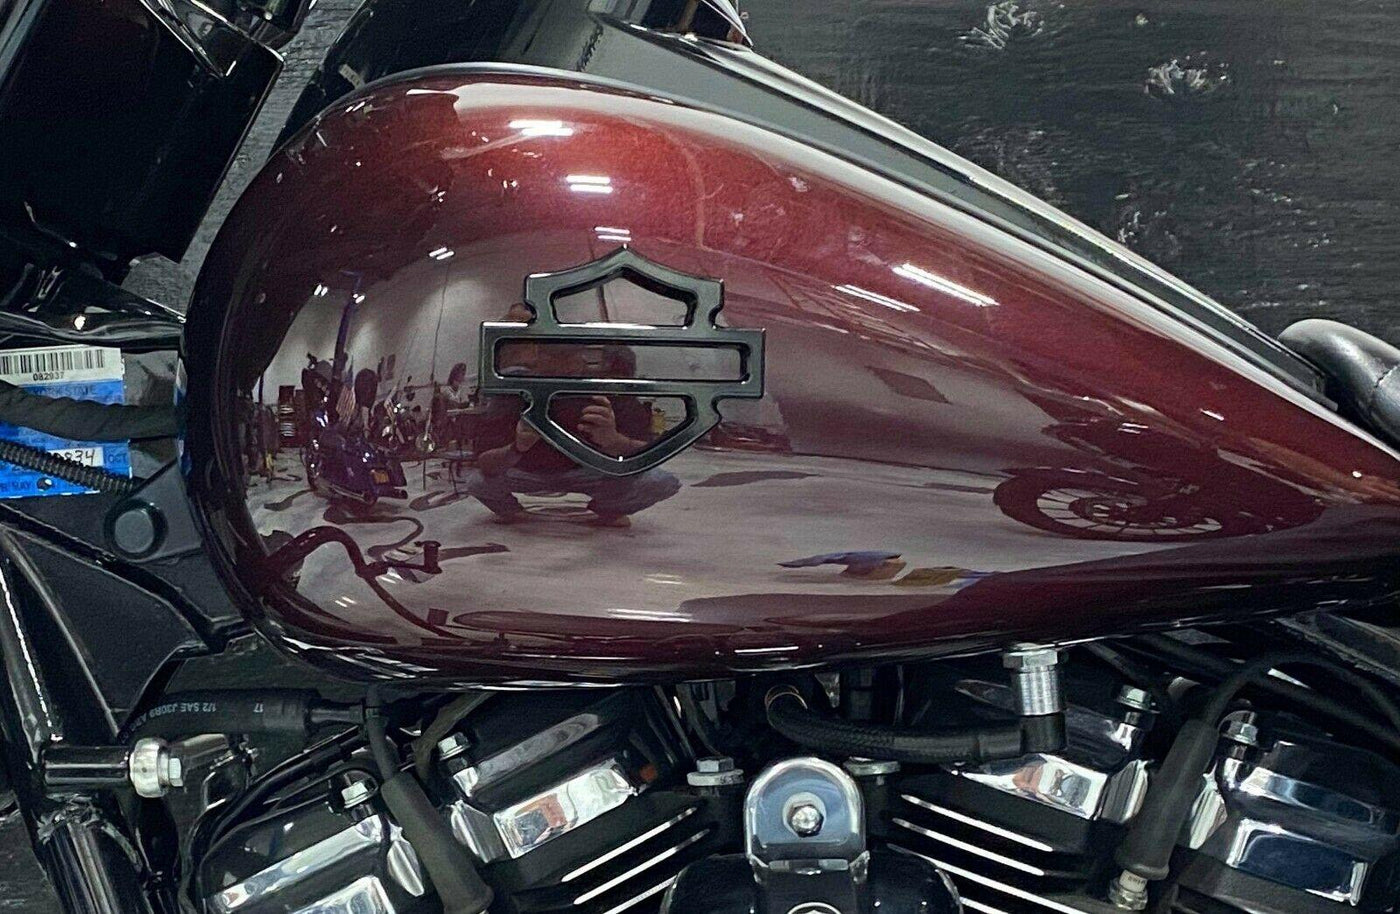 METAL Harley CVO Tank Emblems ALL Black  (set of 2) Touring, 6061 Billet - Moto Life Products